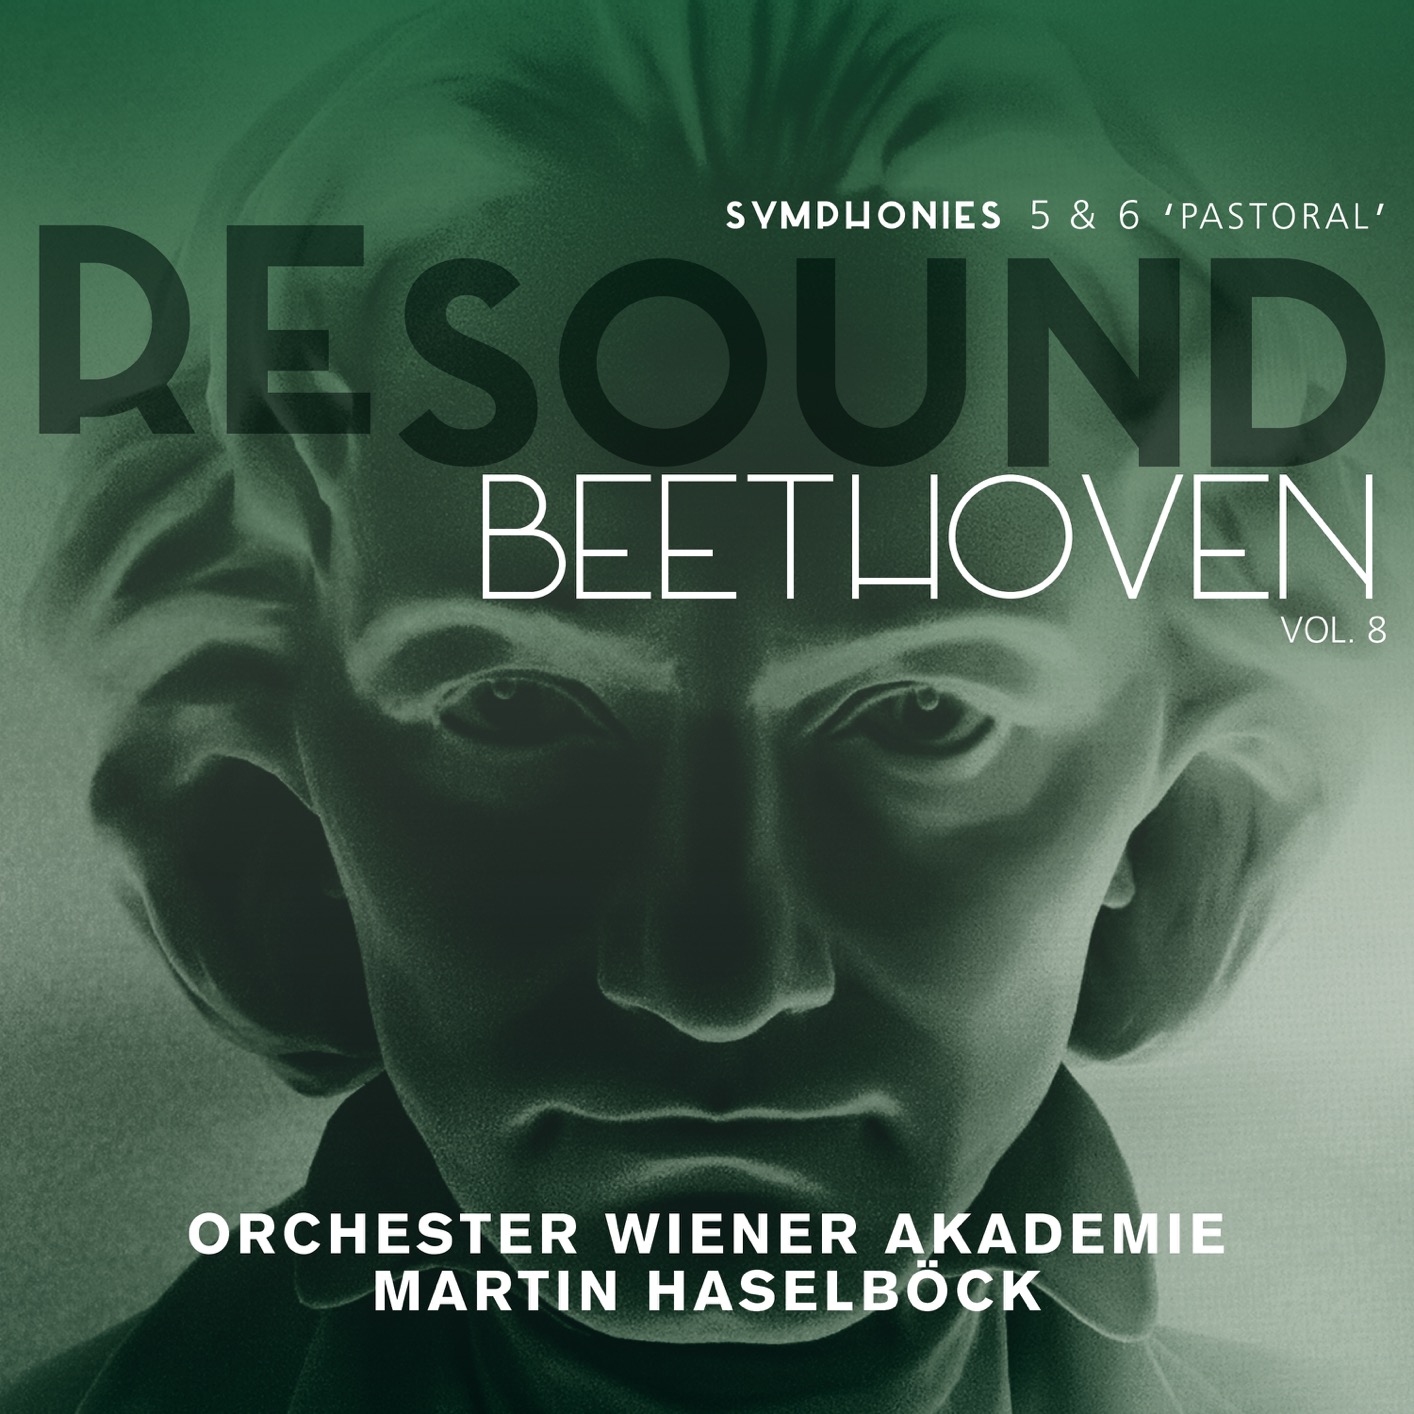 Martin Haselbock - Beethoven: Symphonies 5 & 6 “Pastoral” (Resound Collection, Vol. 8) (2020) [FLAC 24bit/96kHz]